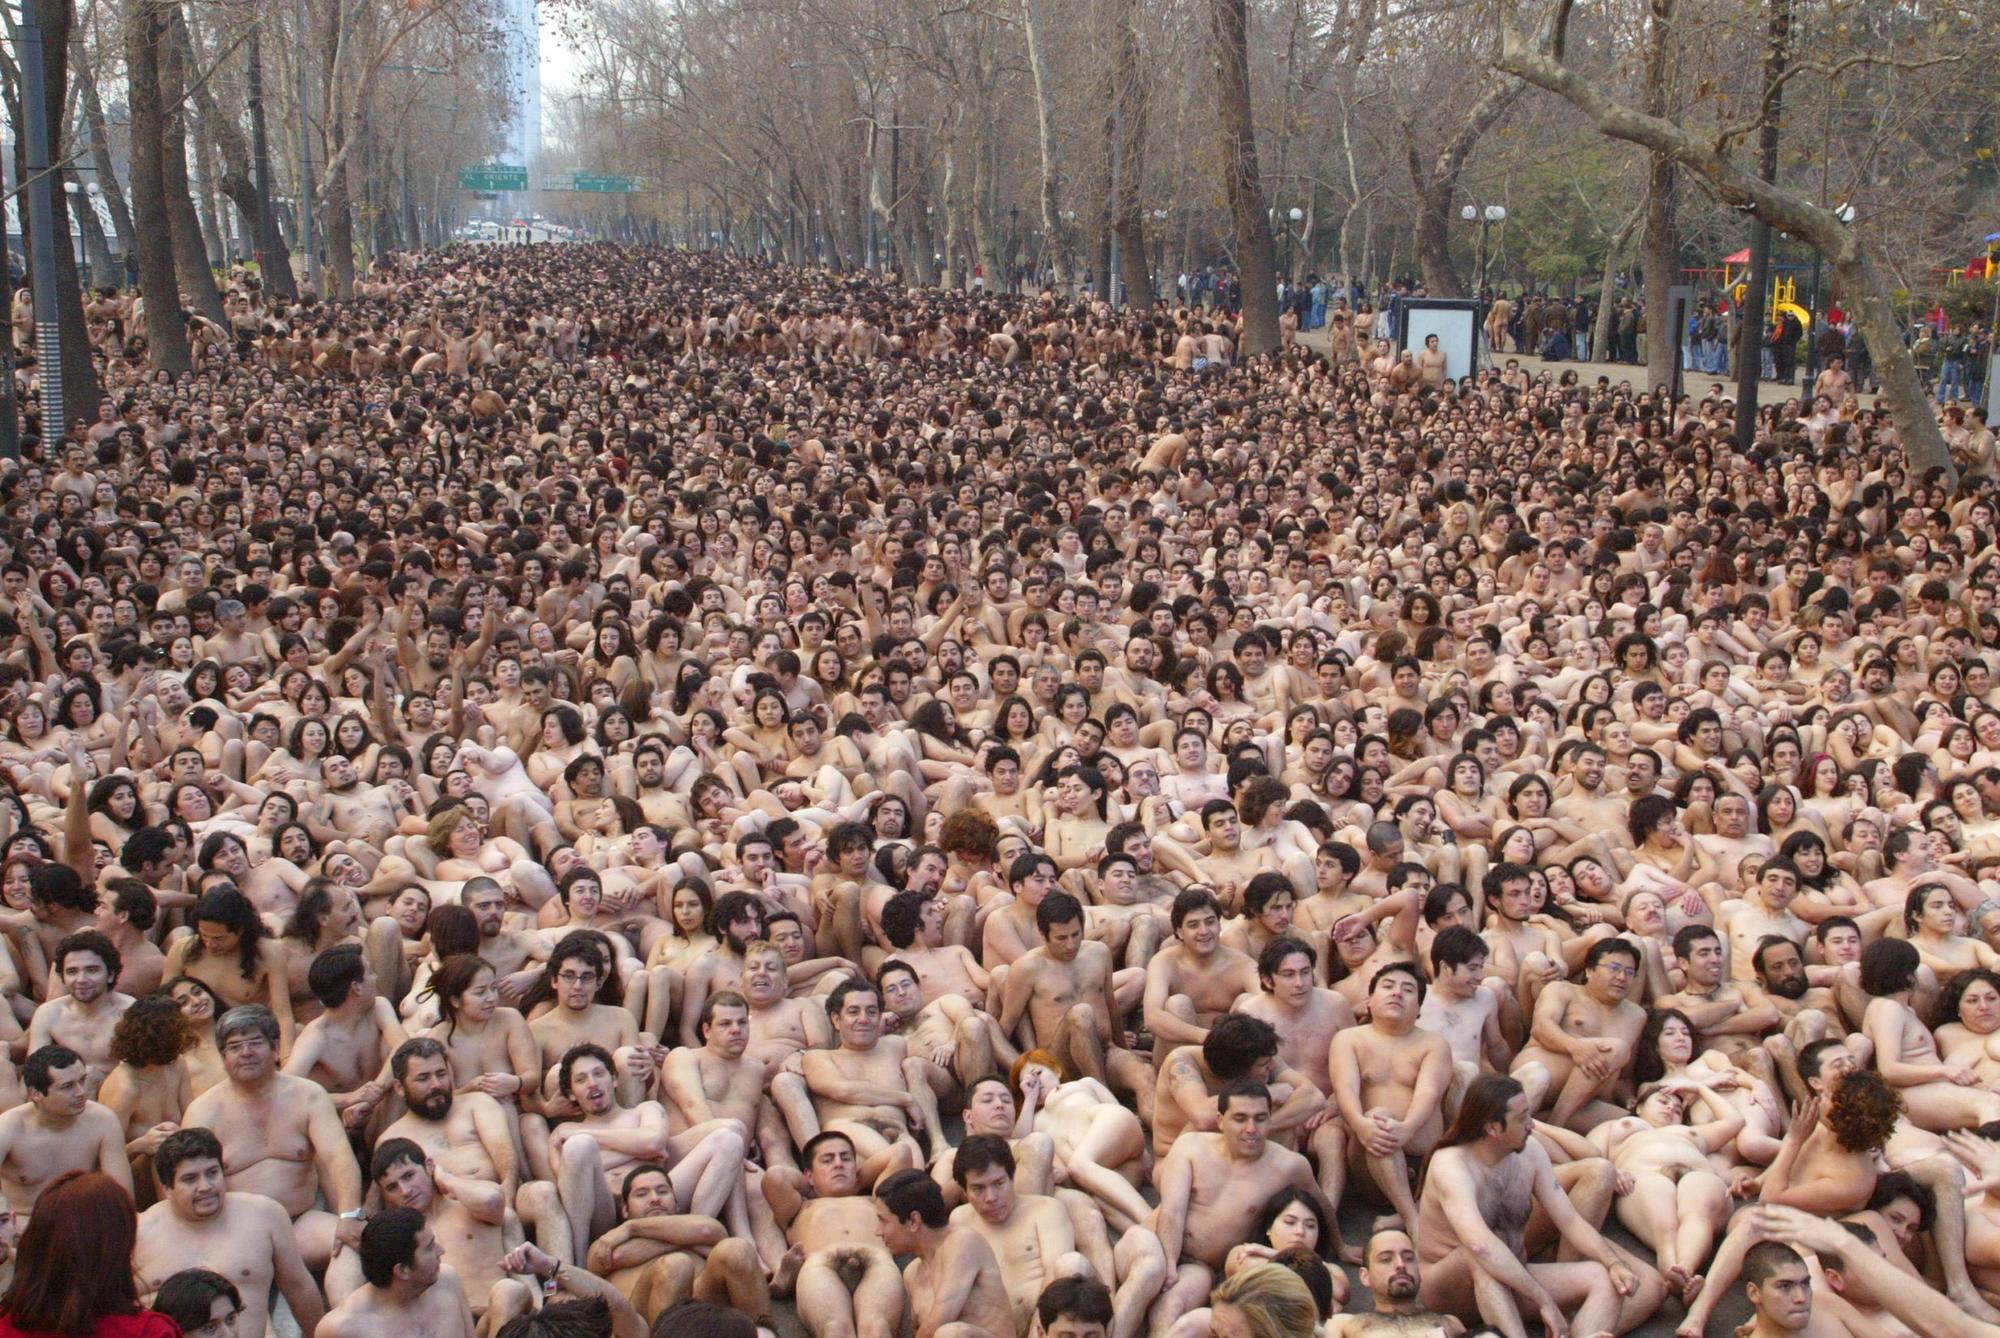 david klozik share people naked in public photos